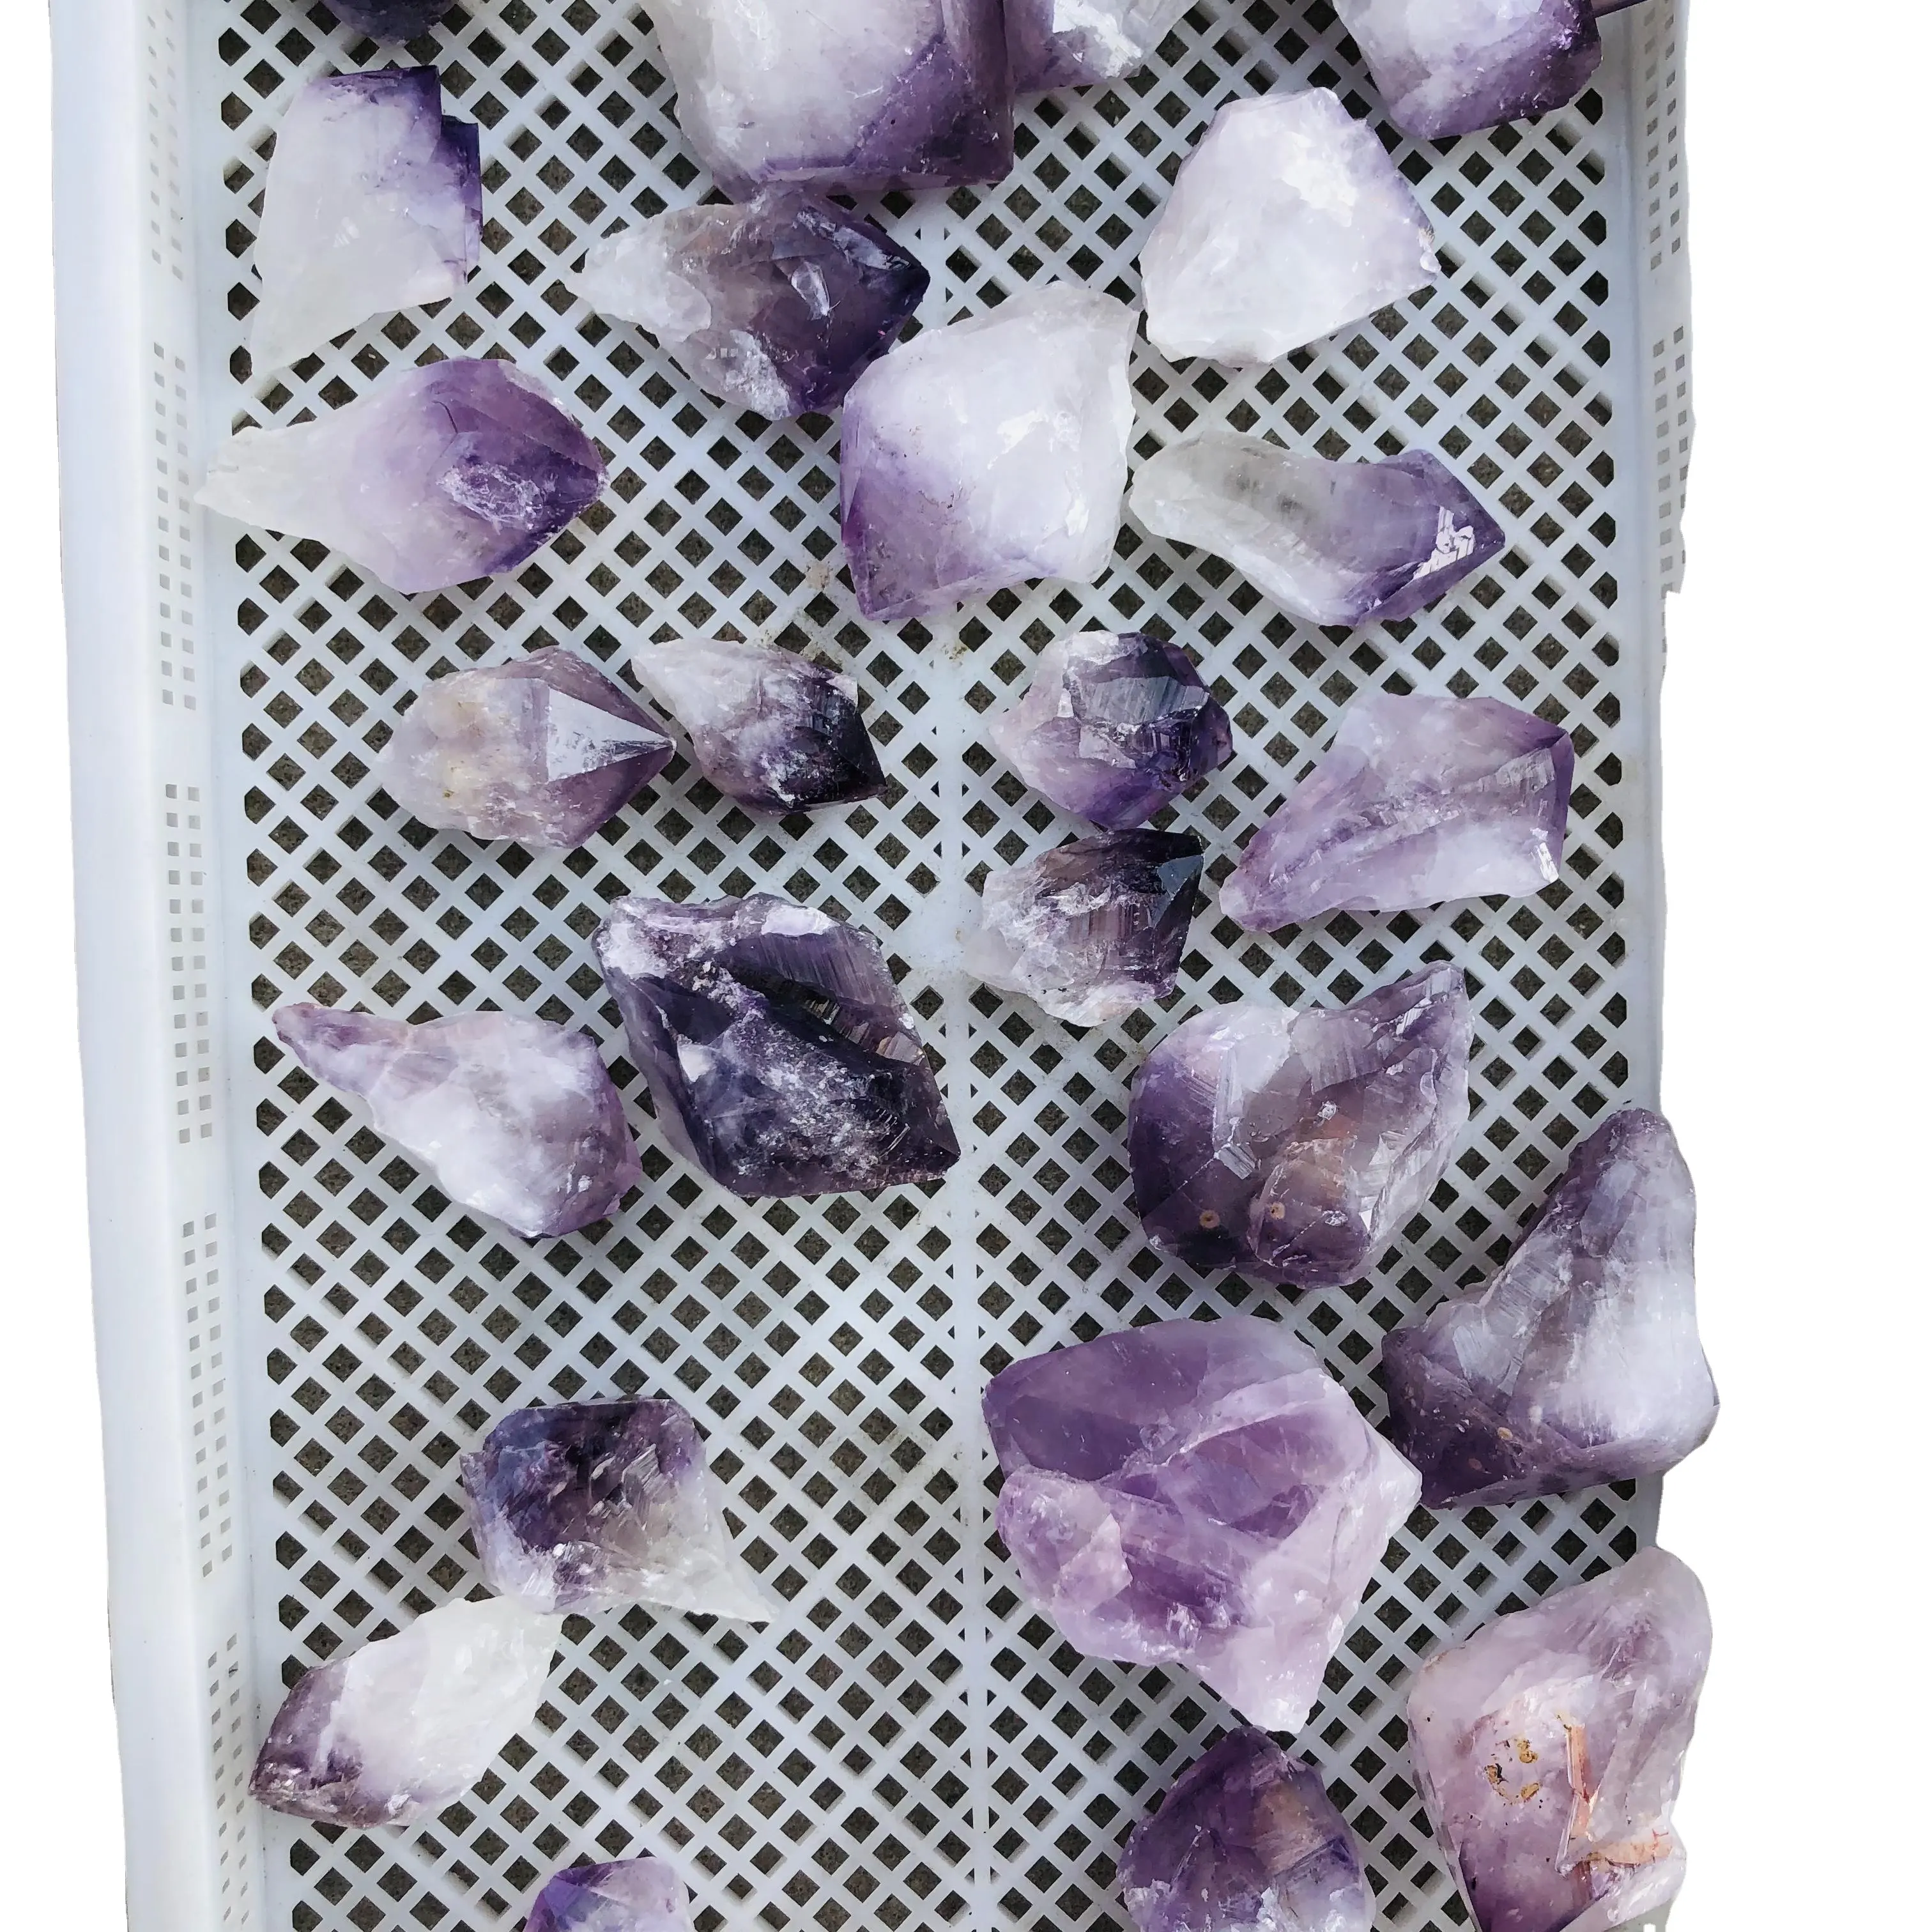 Wholesale in bulk rare Natural High Quality healing quartz light purple free shape Amethyst point towers on sale